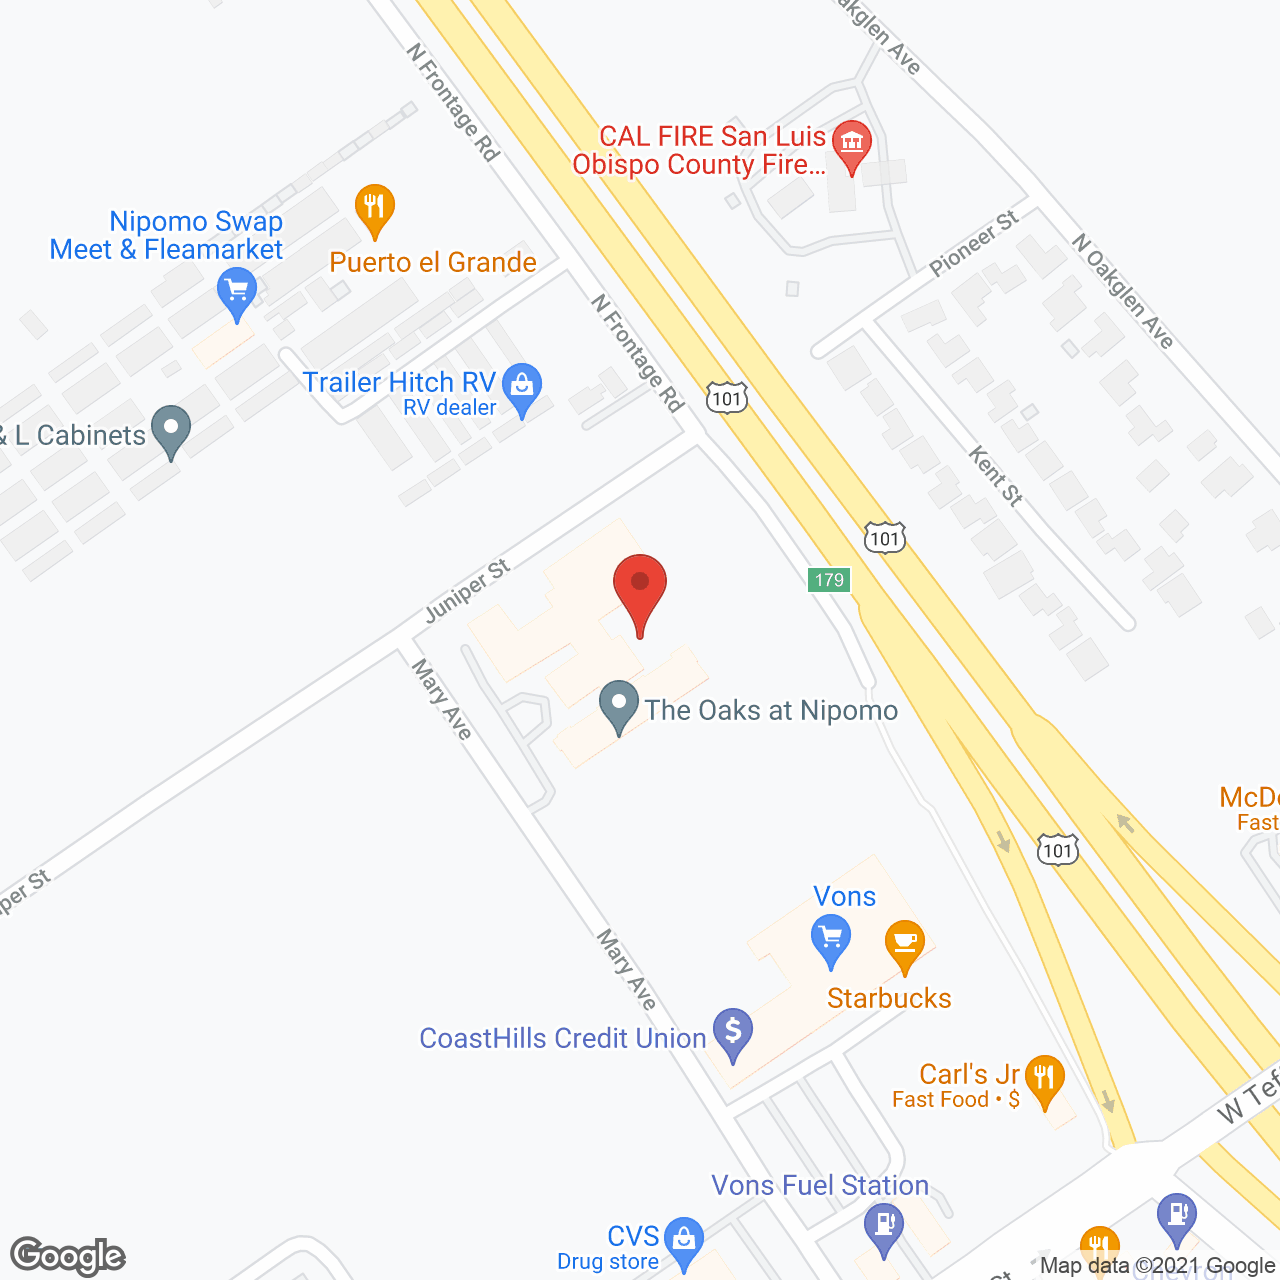 The Oaks at Nipomo in google map